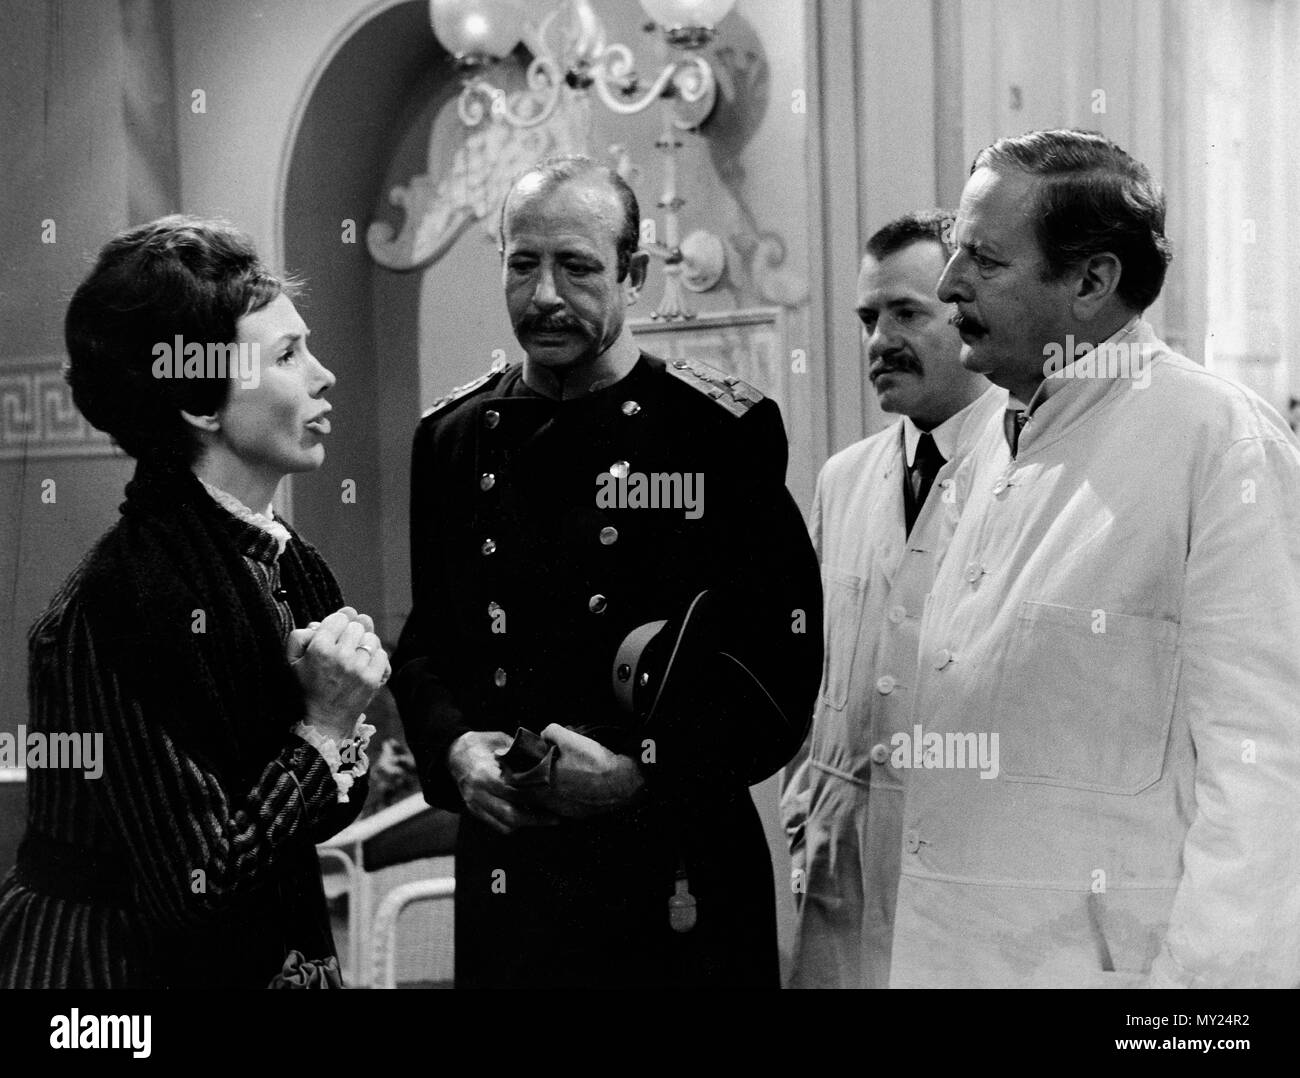 Antitoxin, Fernsehfilm, Deutschland 1967, Regie: Udo Langhoff, Darsteller: Priska Stadler, Konrad Georg, Peter Lehmbrock, Reinhold Nietschmann Stock Photo